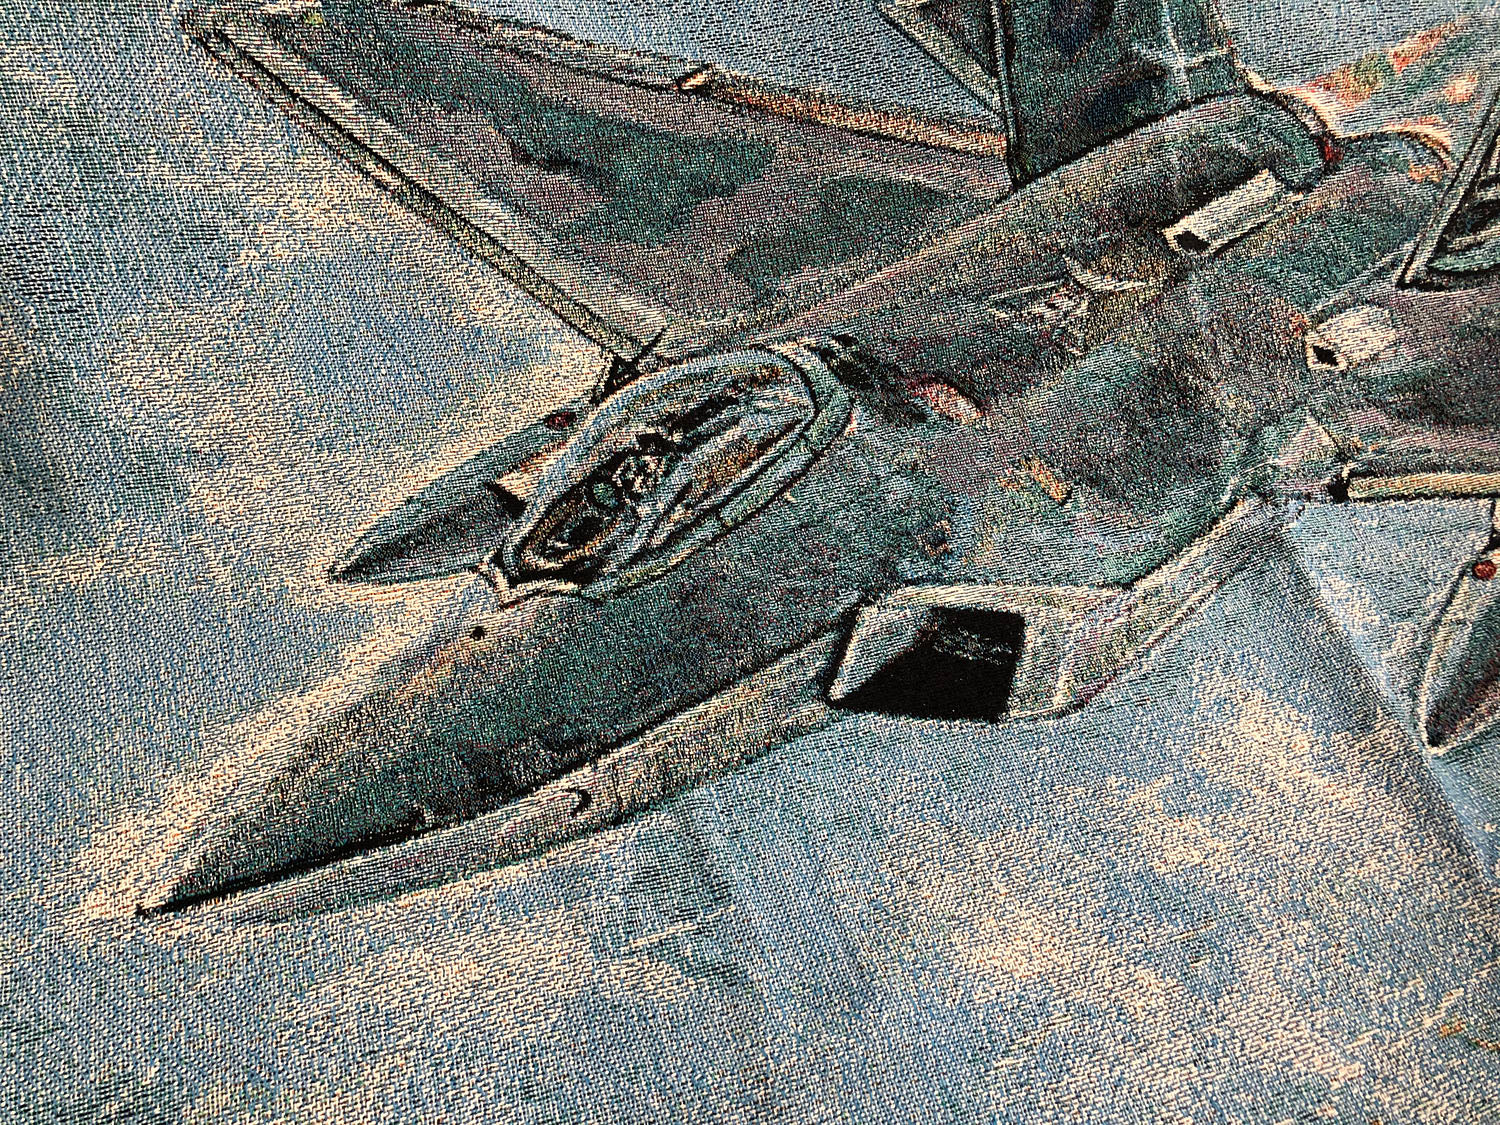 Raptor F-22 Painting Woven Blanket Throw